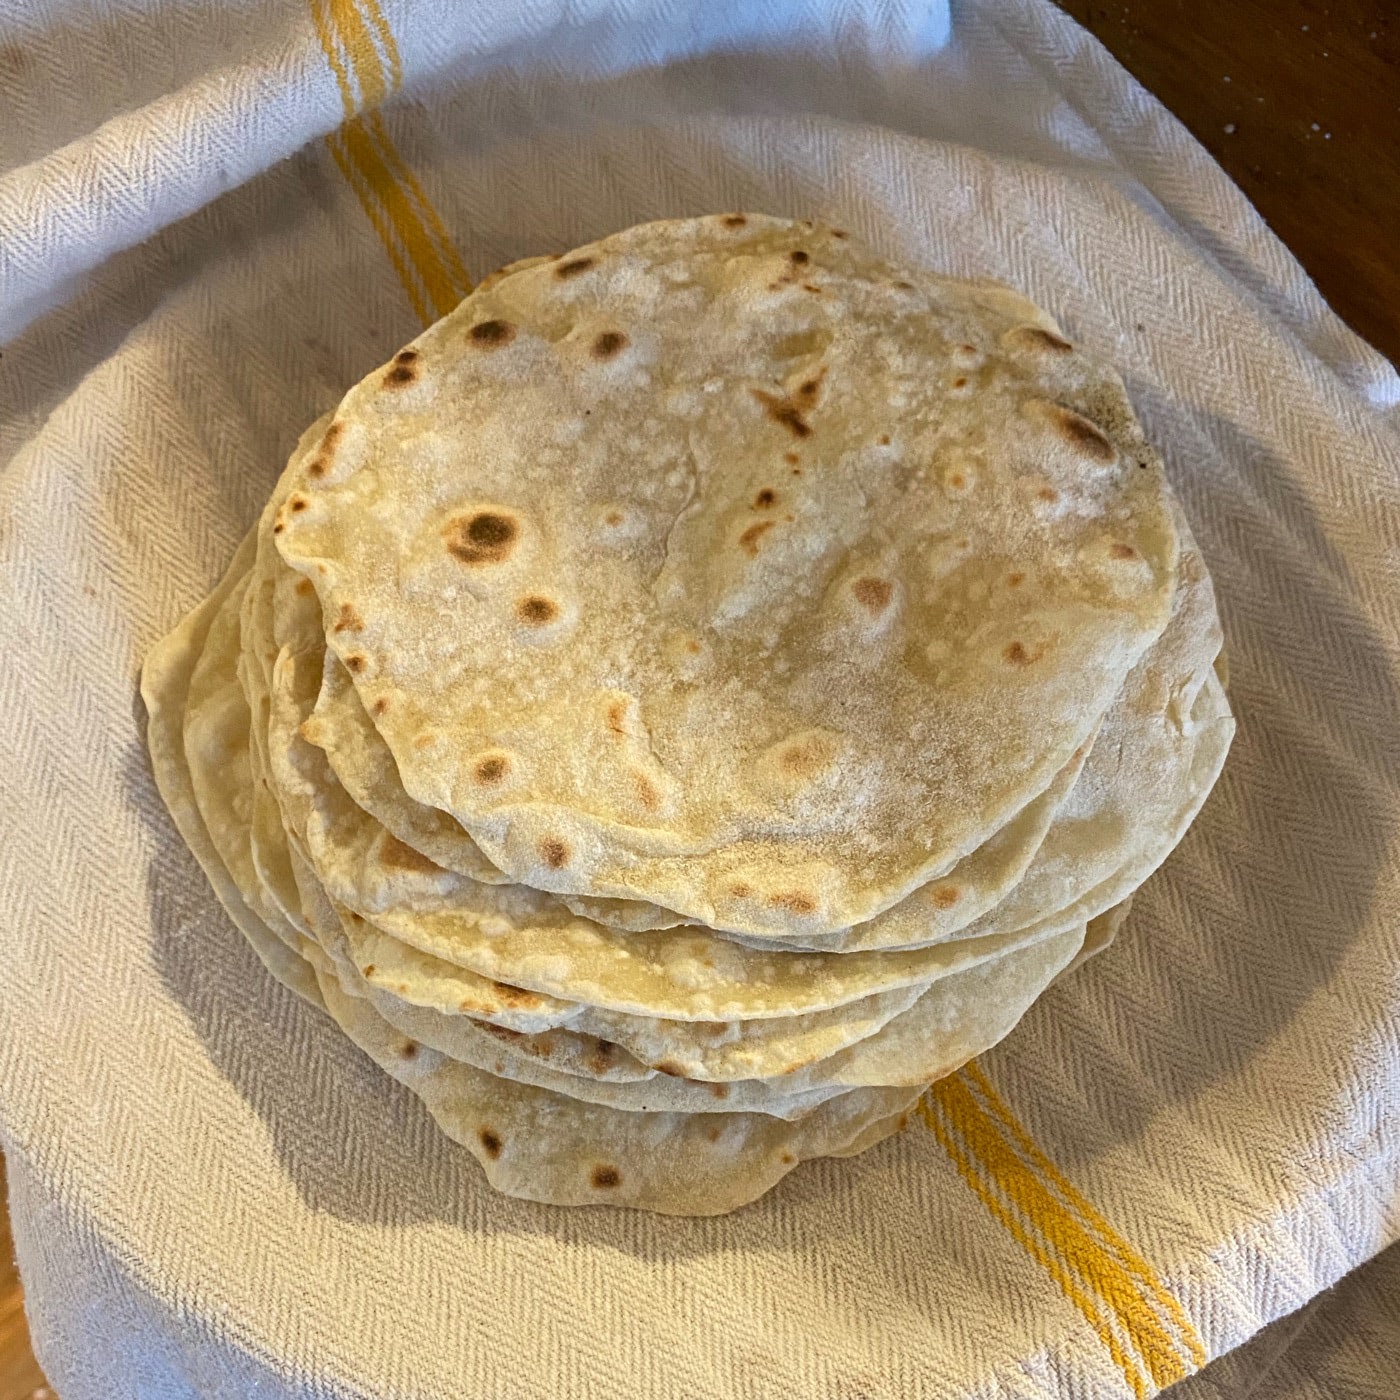 A photo of freshly made tortillas.